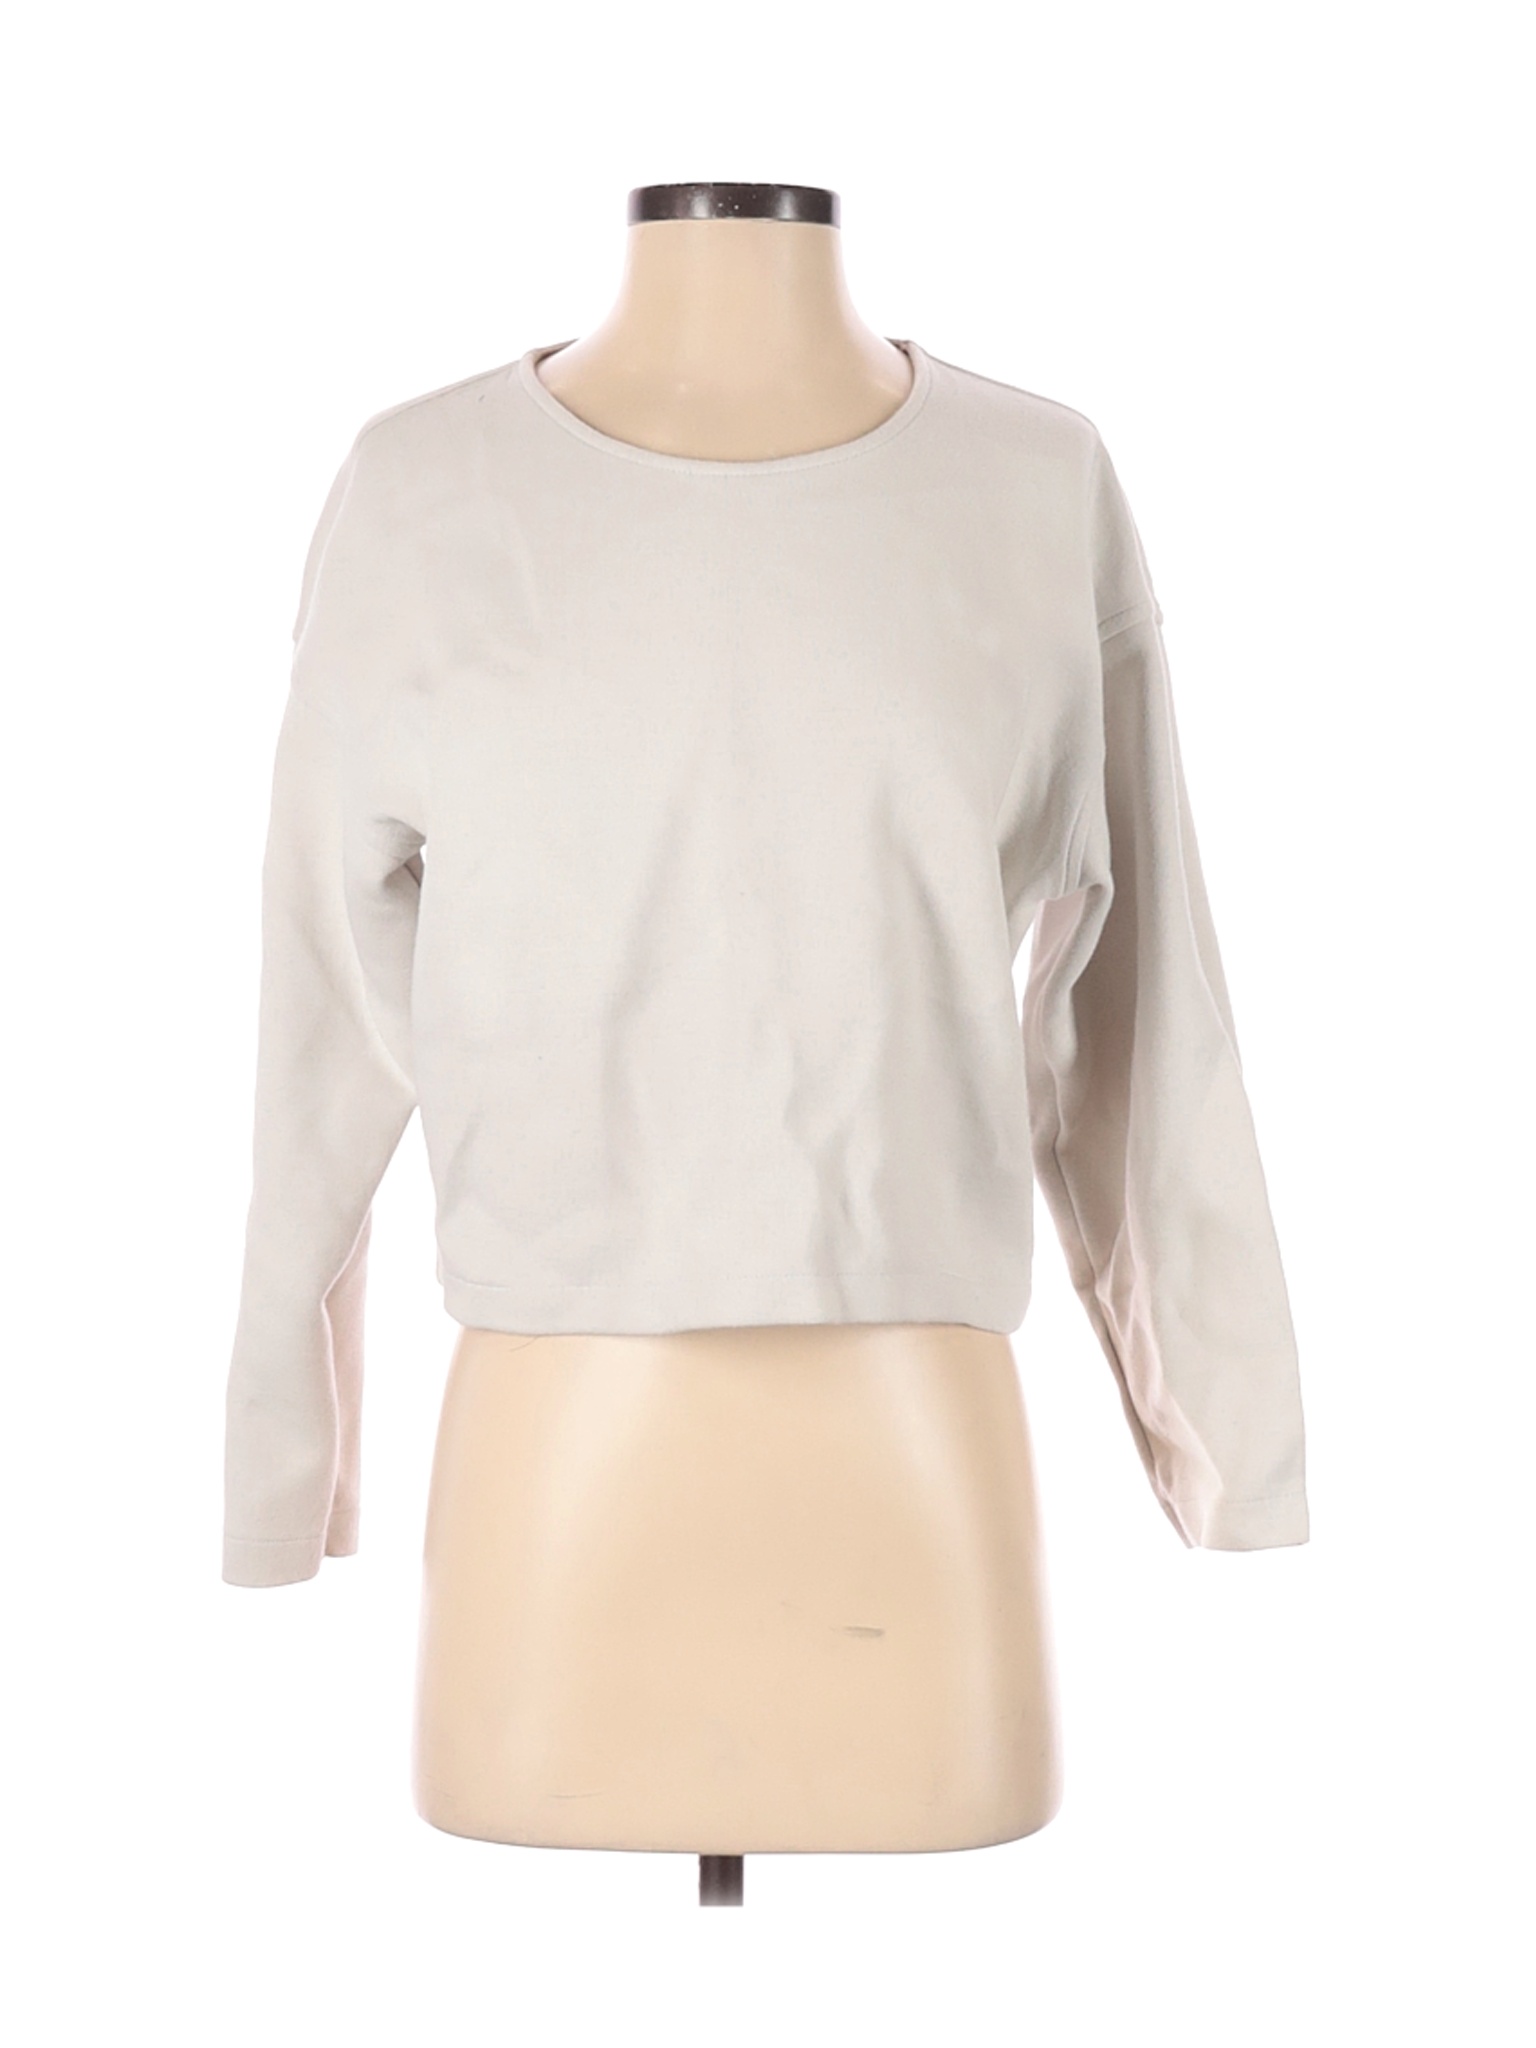 Uniqlo Women White Sweatshirt XS | eBay